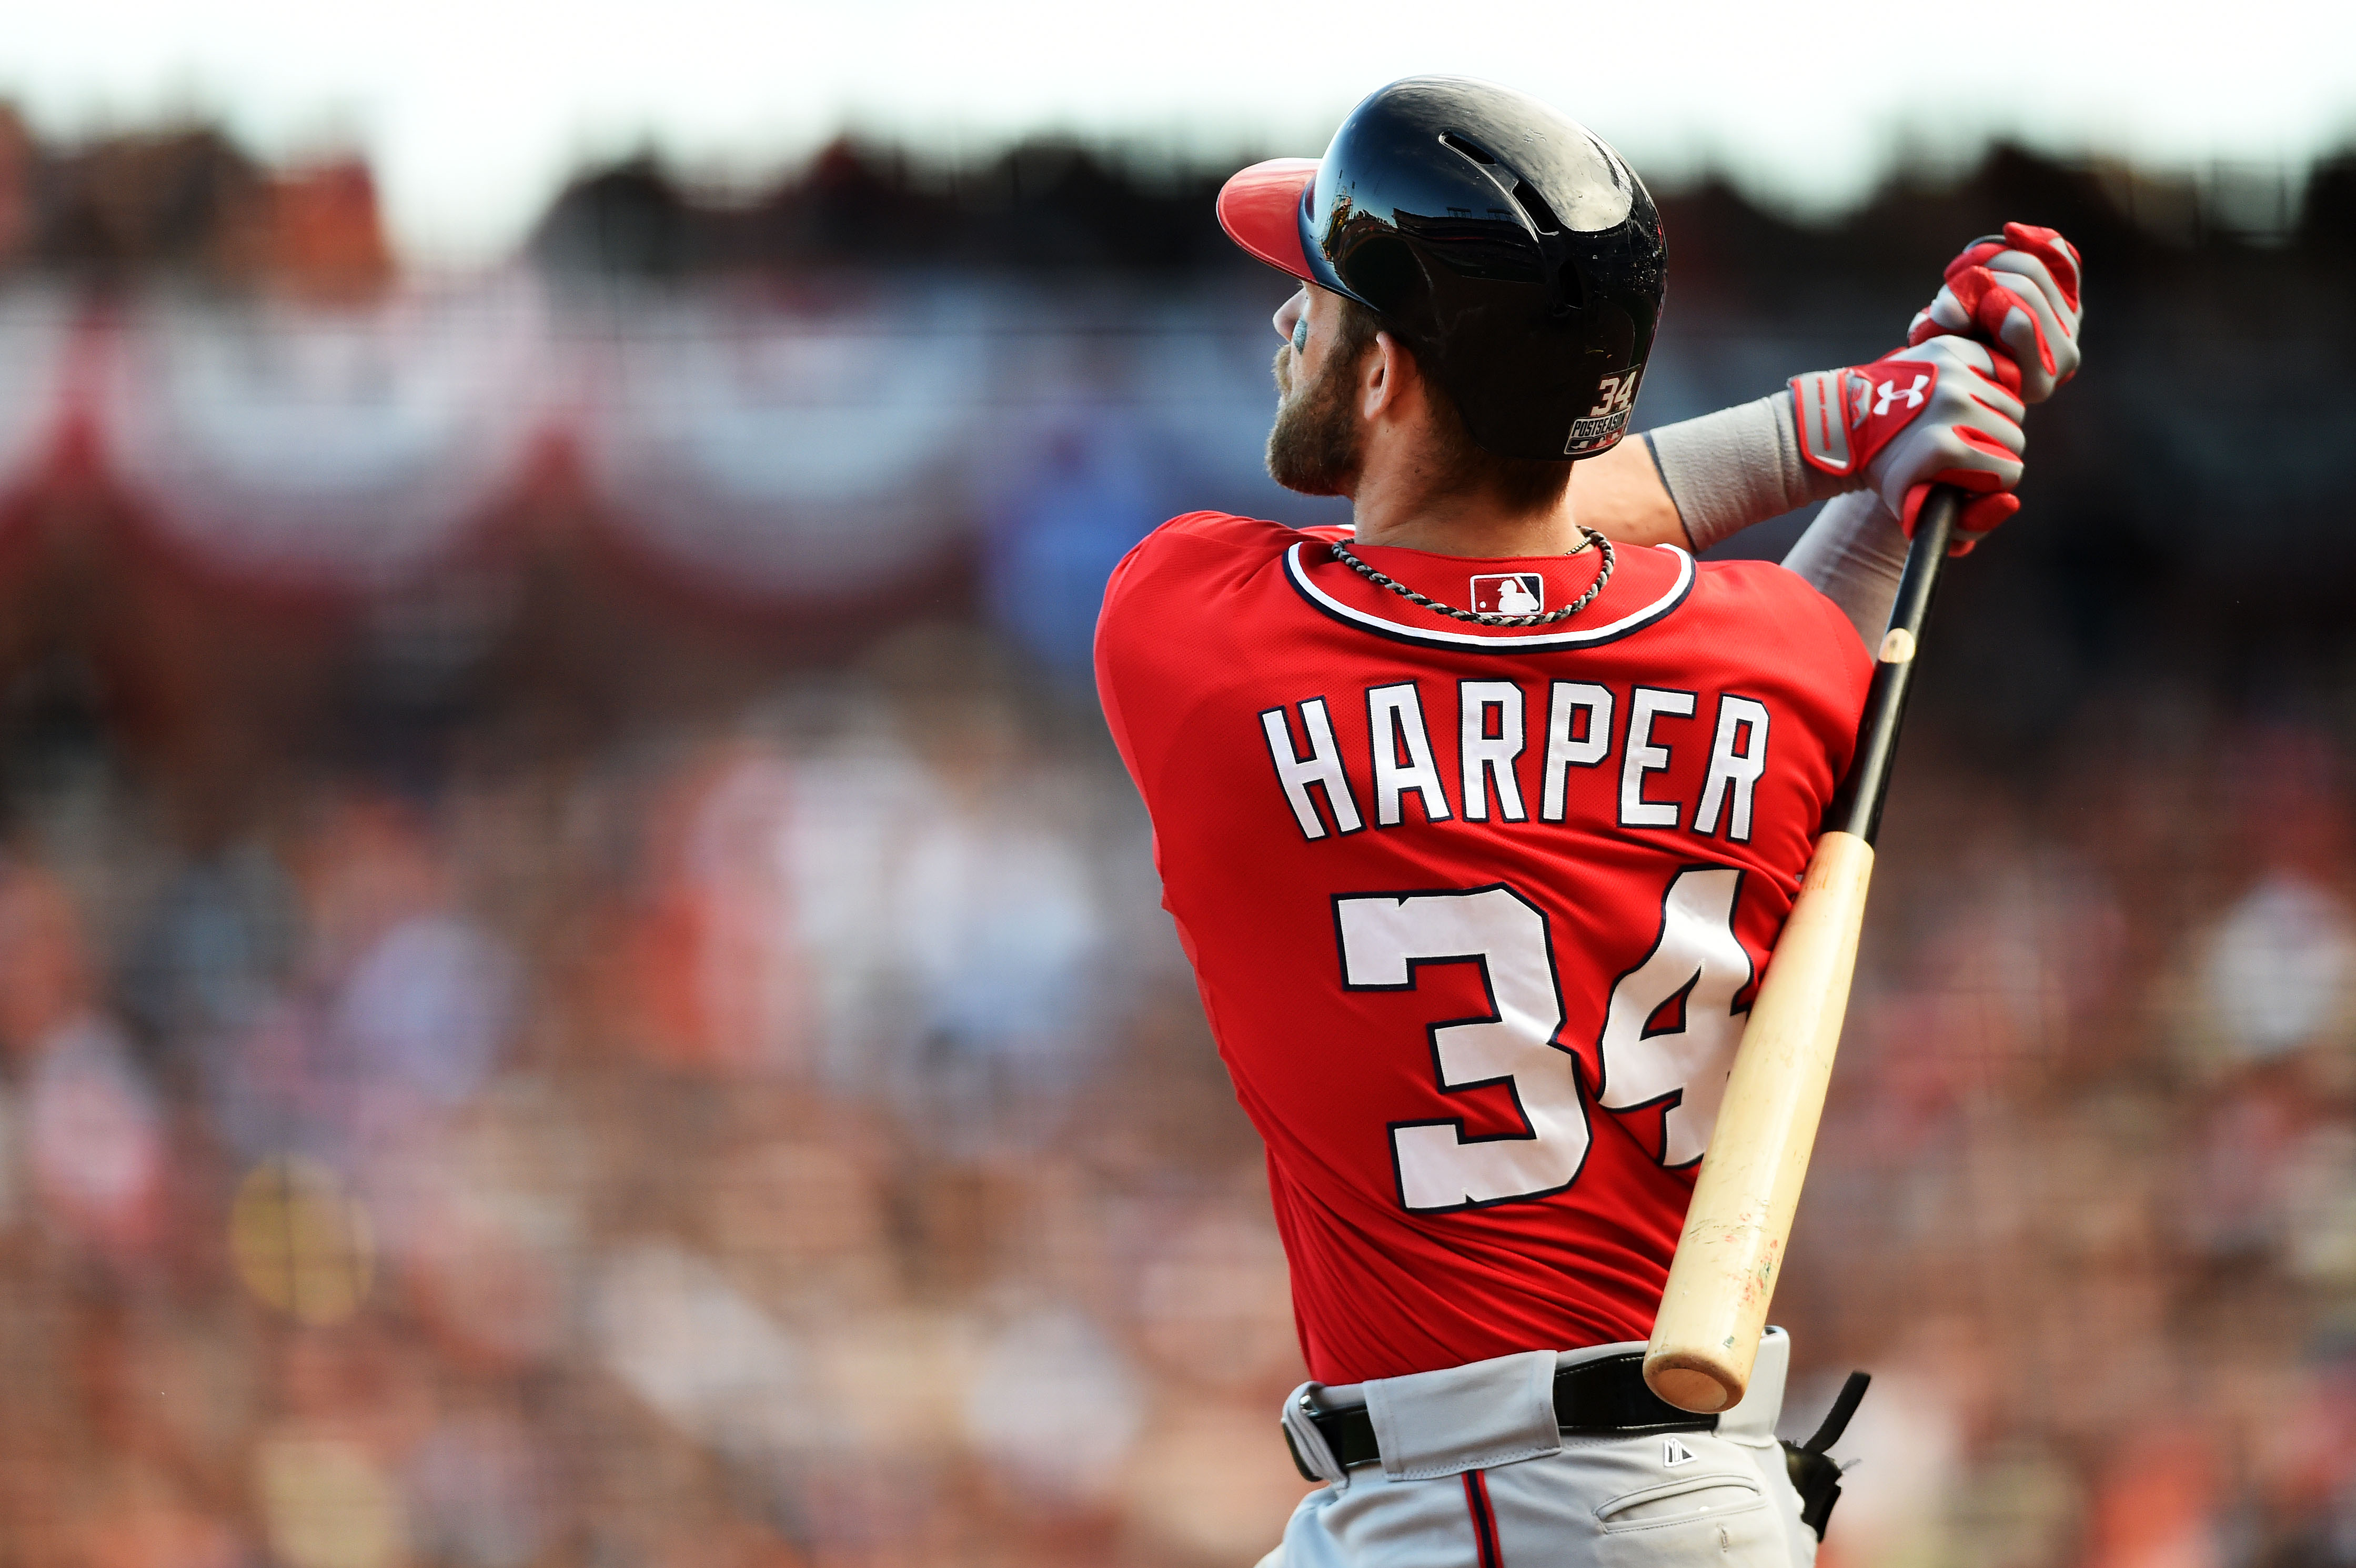 Bryce Harper: The Young Phenom of Baseball